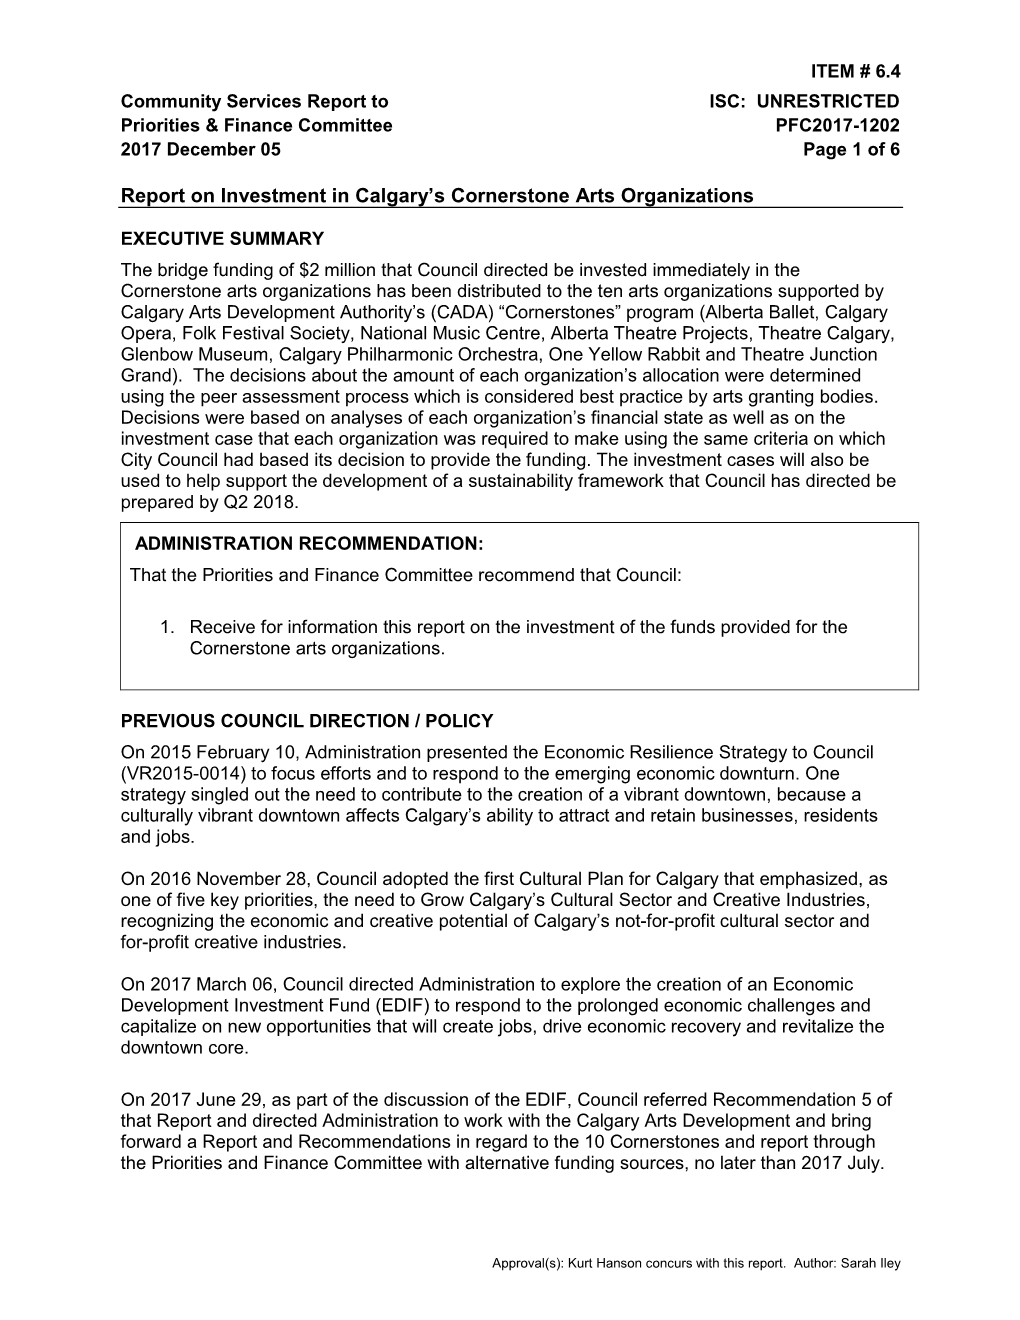 Report on Investment in Calgary's Cornerstone Arts Organizations